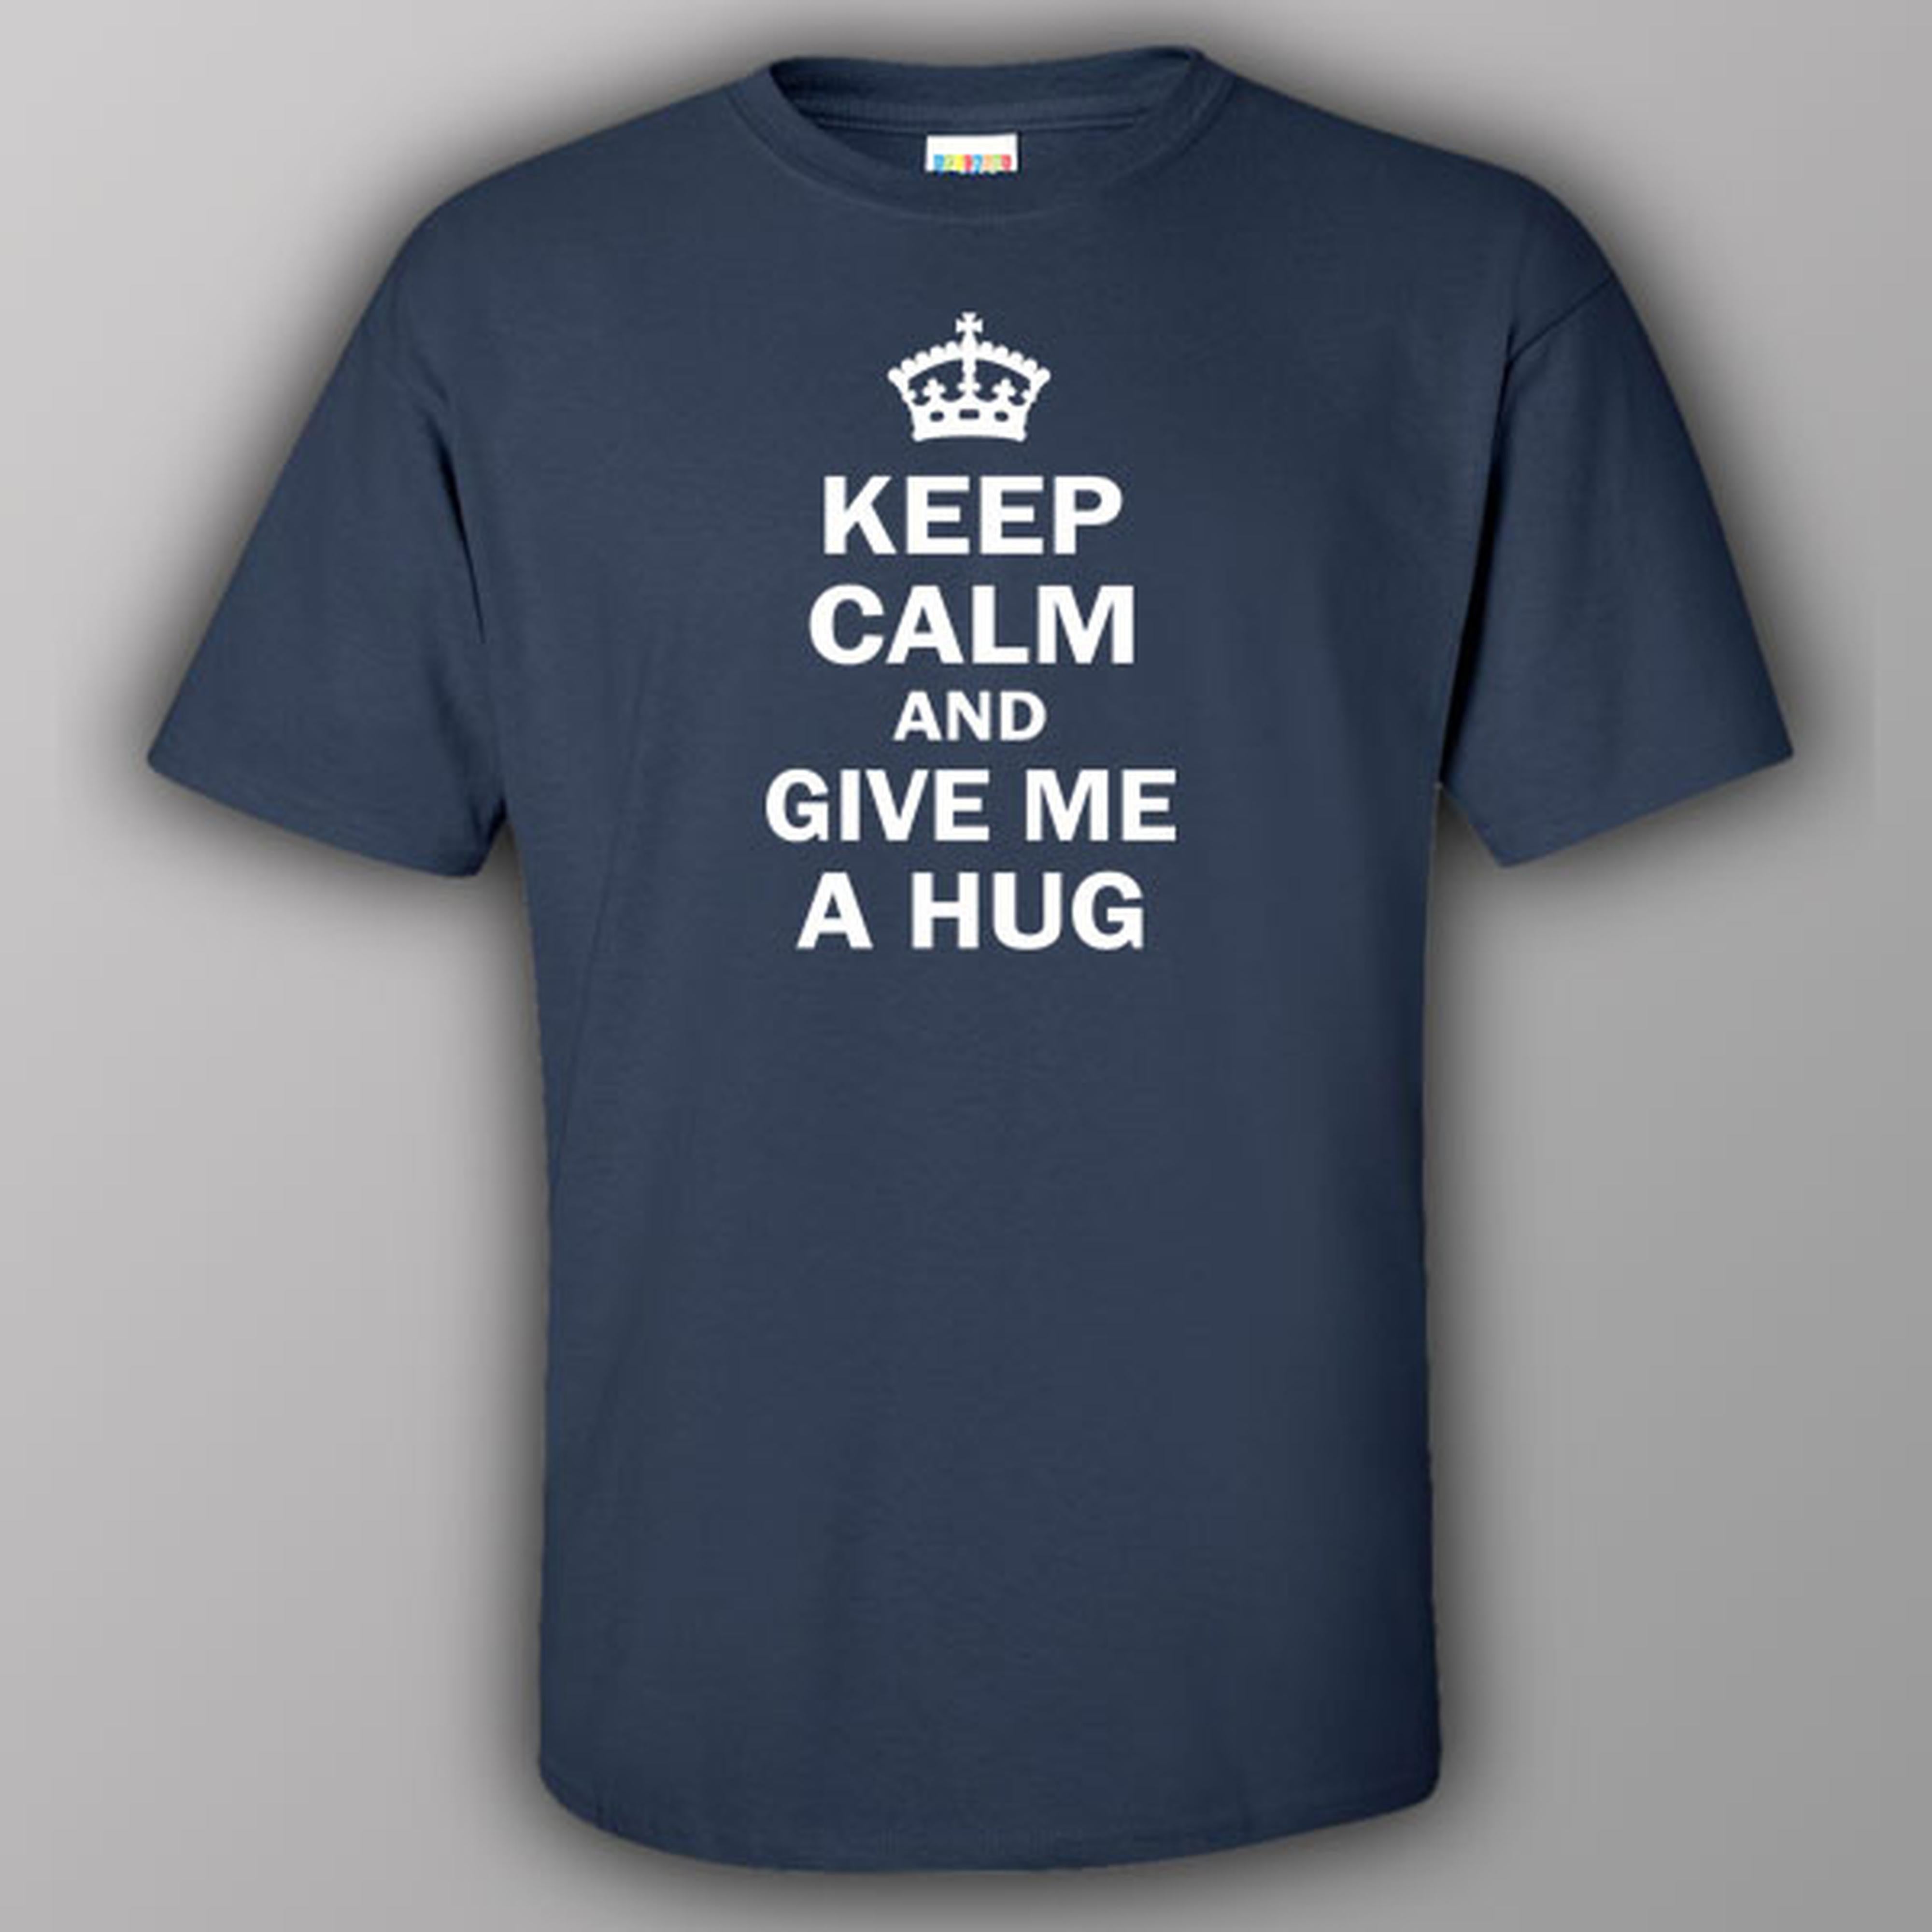 Keep calm and give me a hug - T-shirt